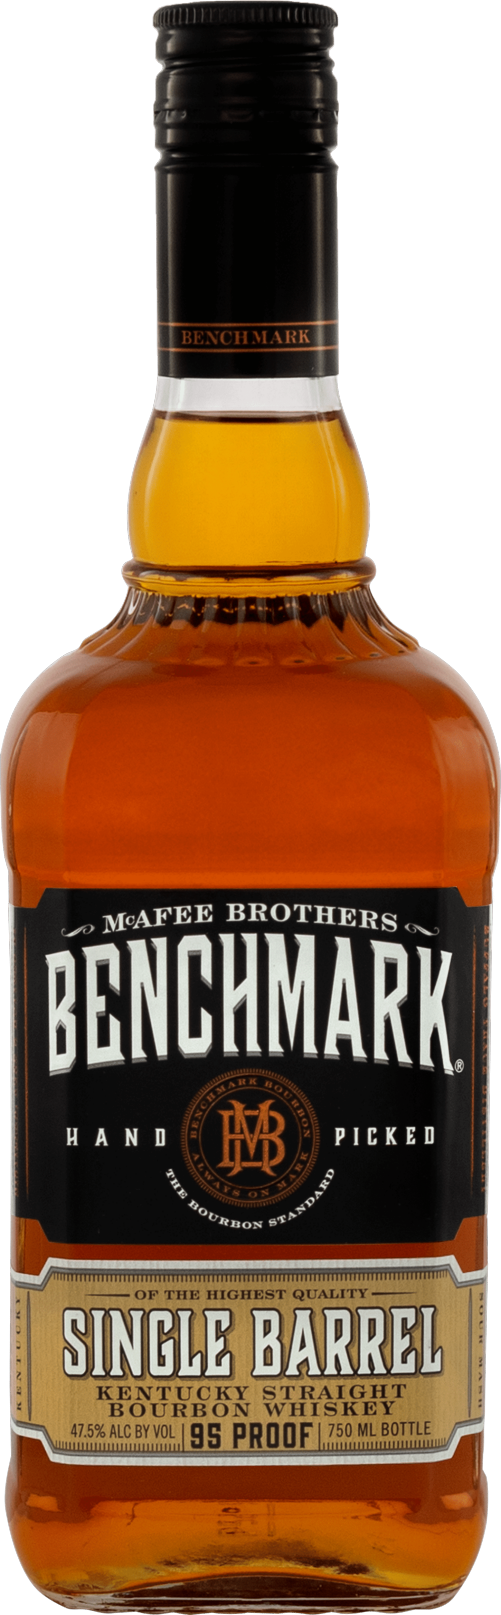 Buy Benchmark Single Barrel Bourbon Whiskey Online -Craft City